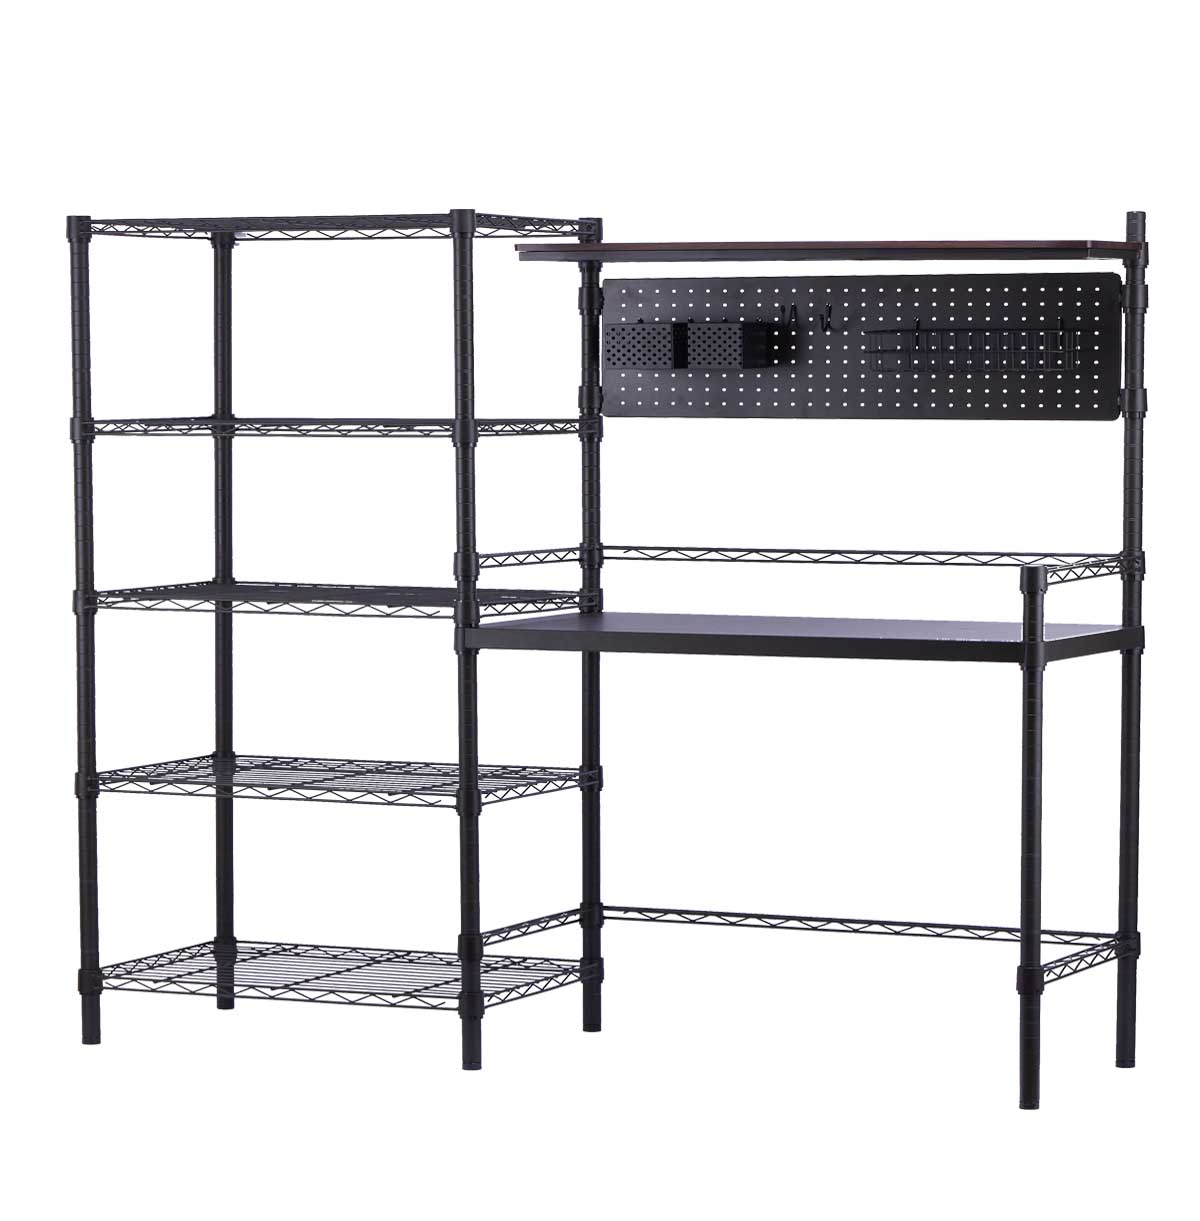 7-Tier Bookshelf / Book Storage Rack /  Workstation Computer Desk With Wire Storage Shelves / Home Office PC Laptop Table Study Desk 